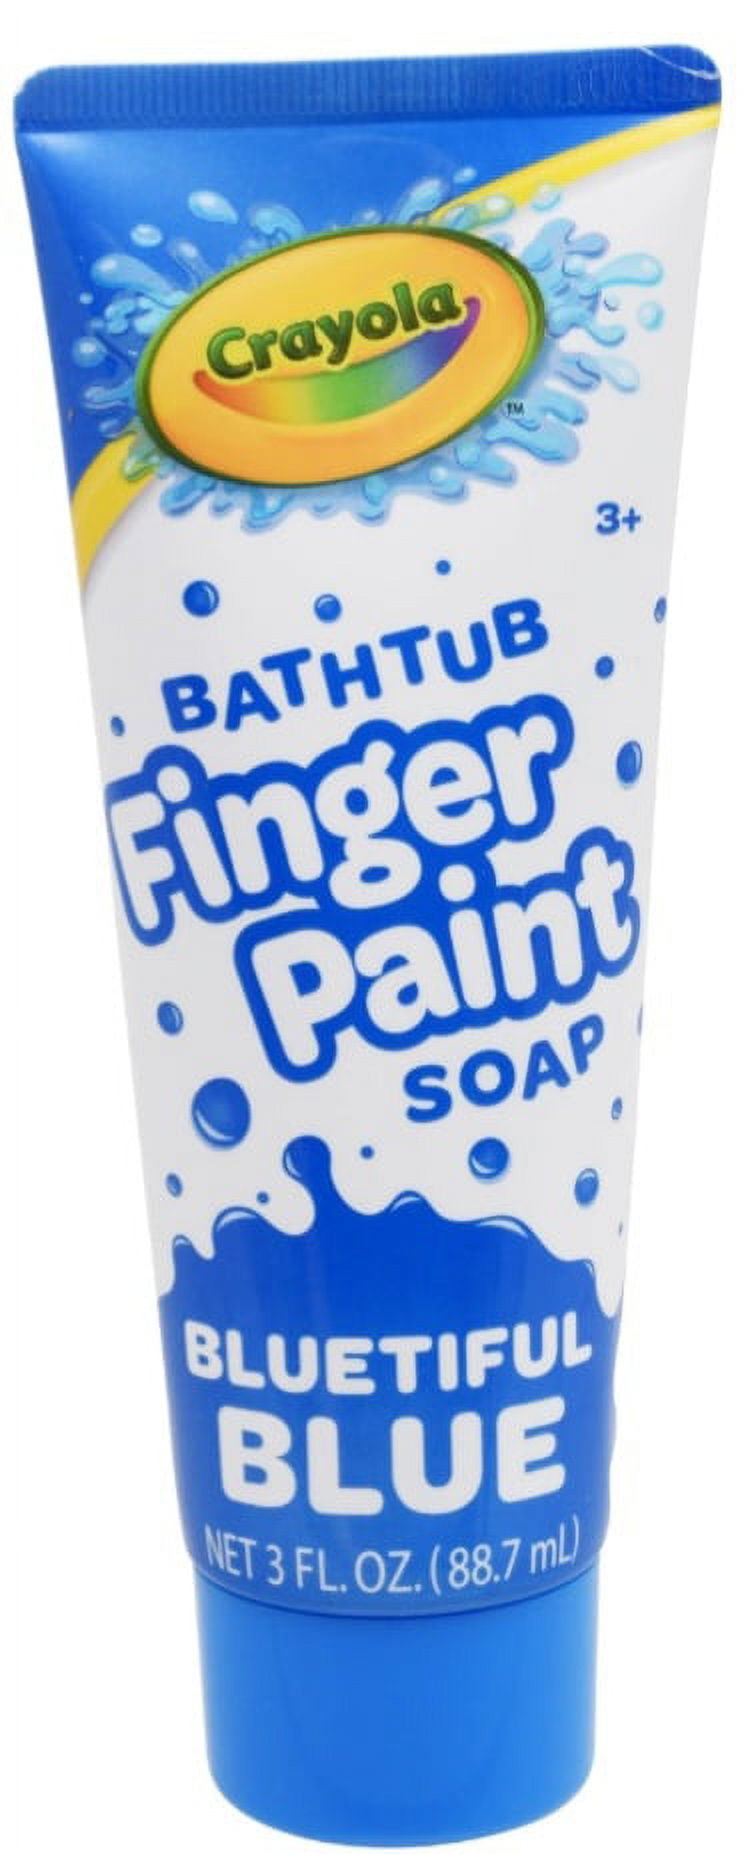 Crayola Neon Bright Bathtub Finger Paint Soap (Set of 5)